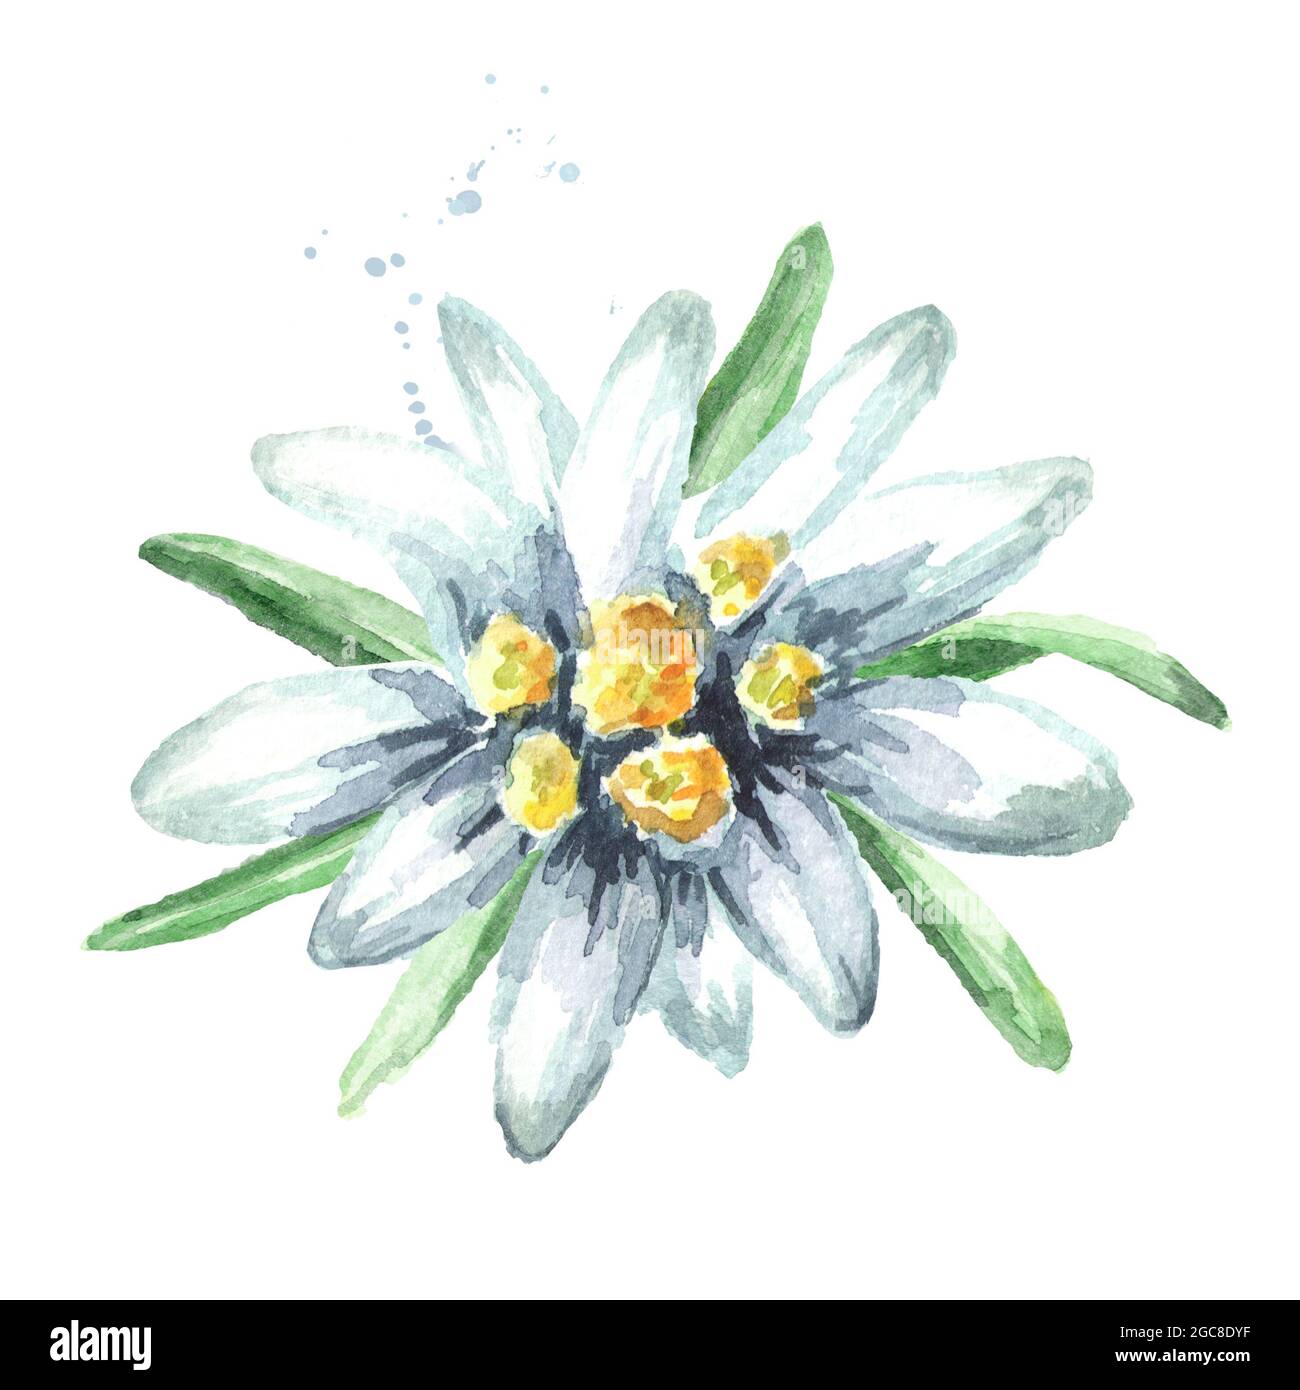 Edelweiss flower (Leontopodium alpinum), Watercolor hand drawn illustration isolated on white background Stock Photo